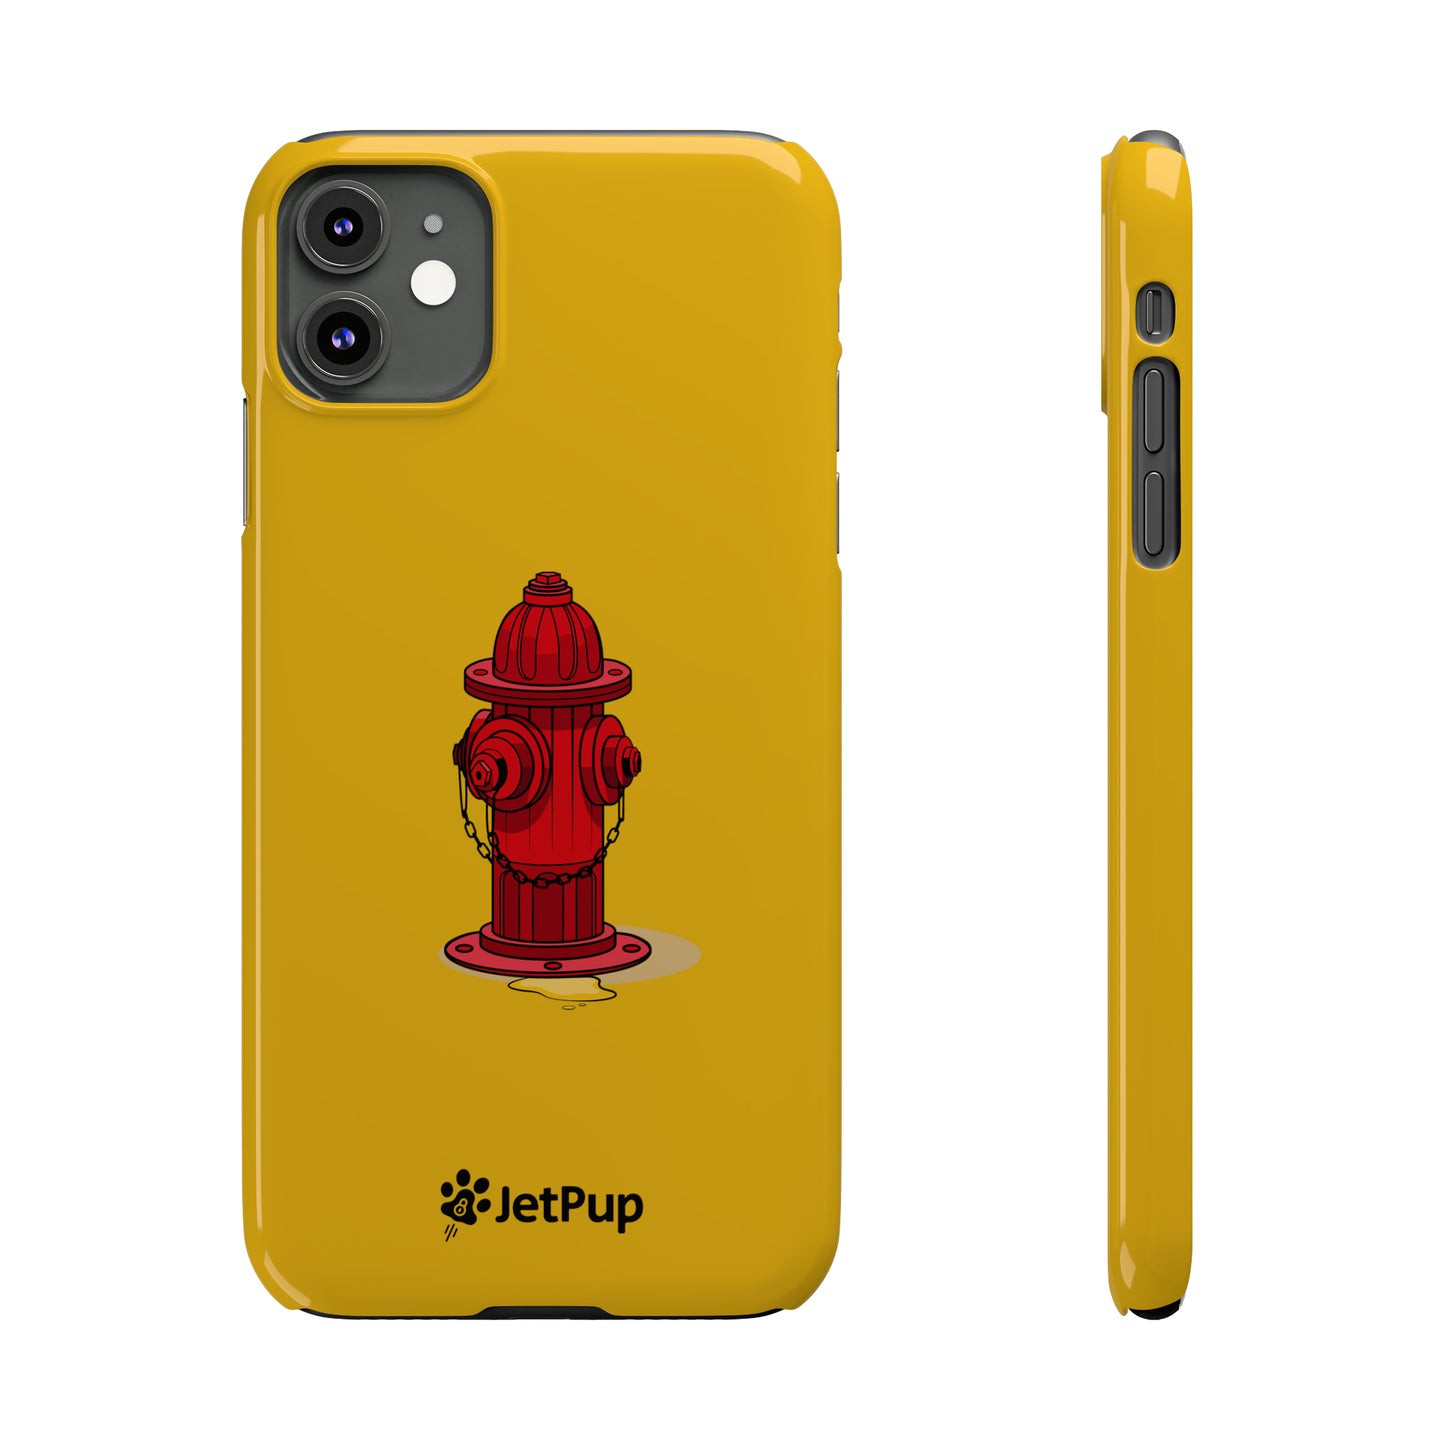 Hydrant Slim iPhone Cases - Yellow